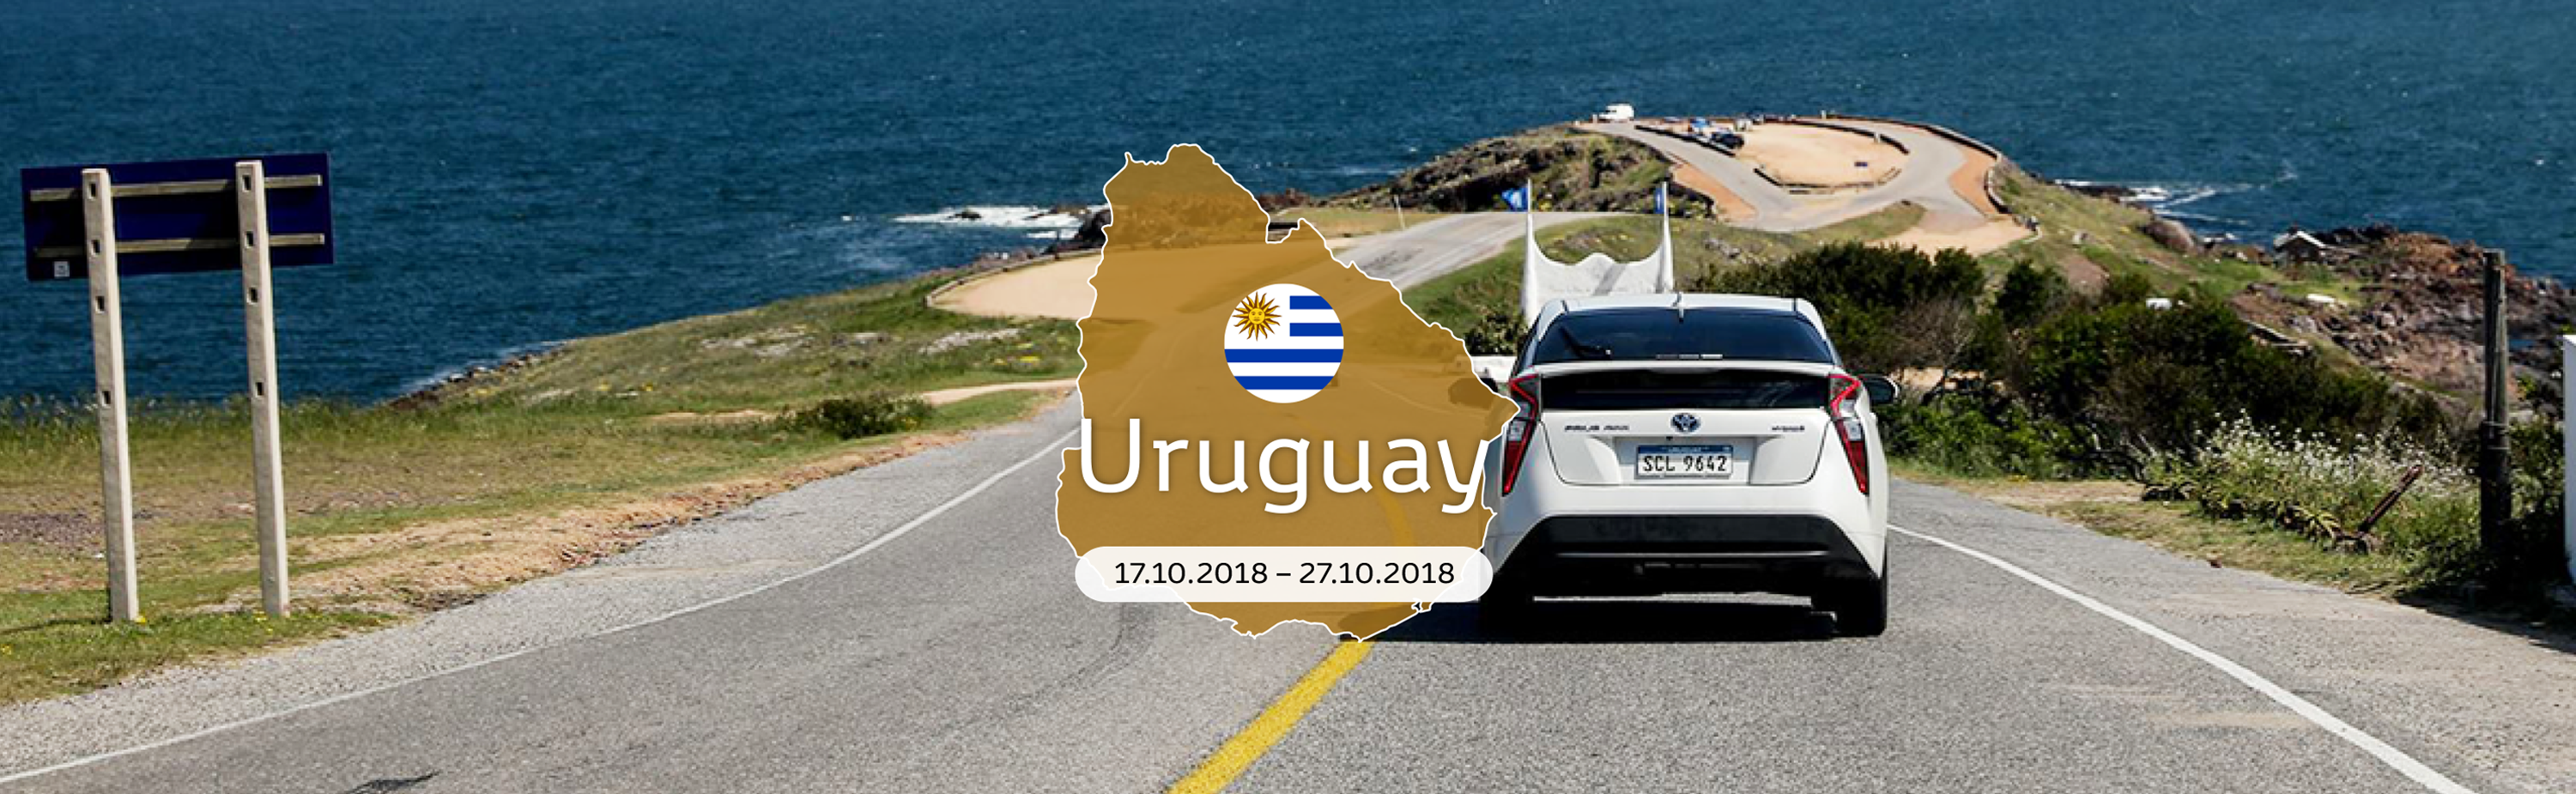 Uruguay 17.10.2018 – 27.10.2018